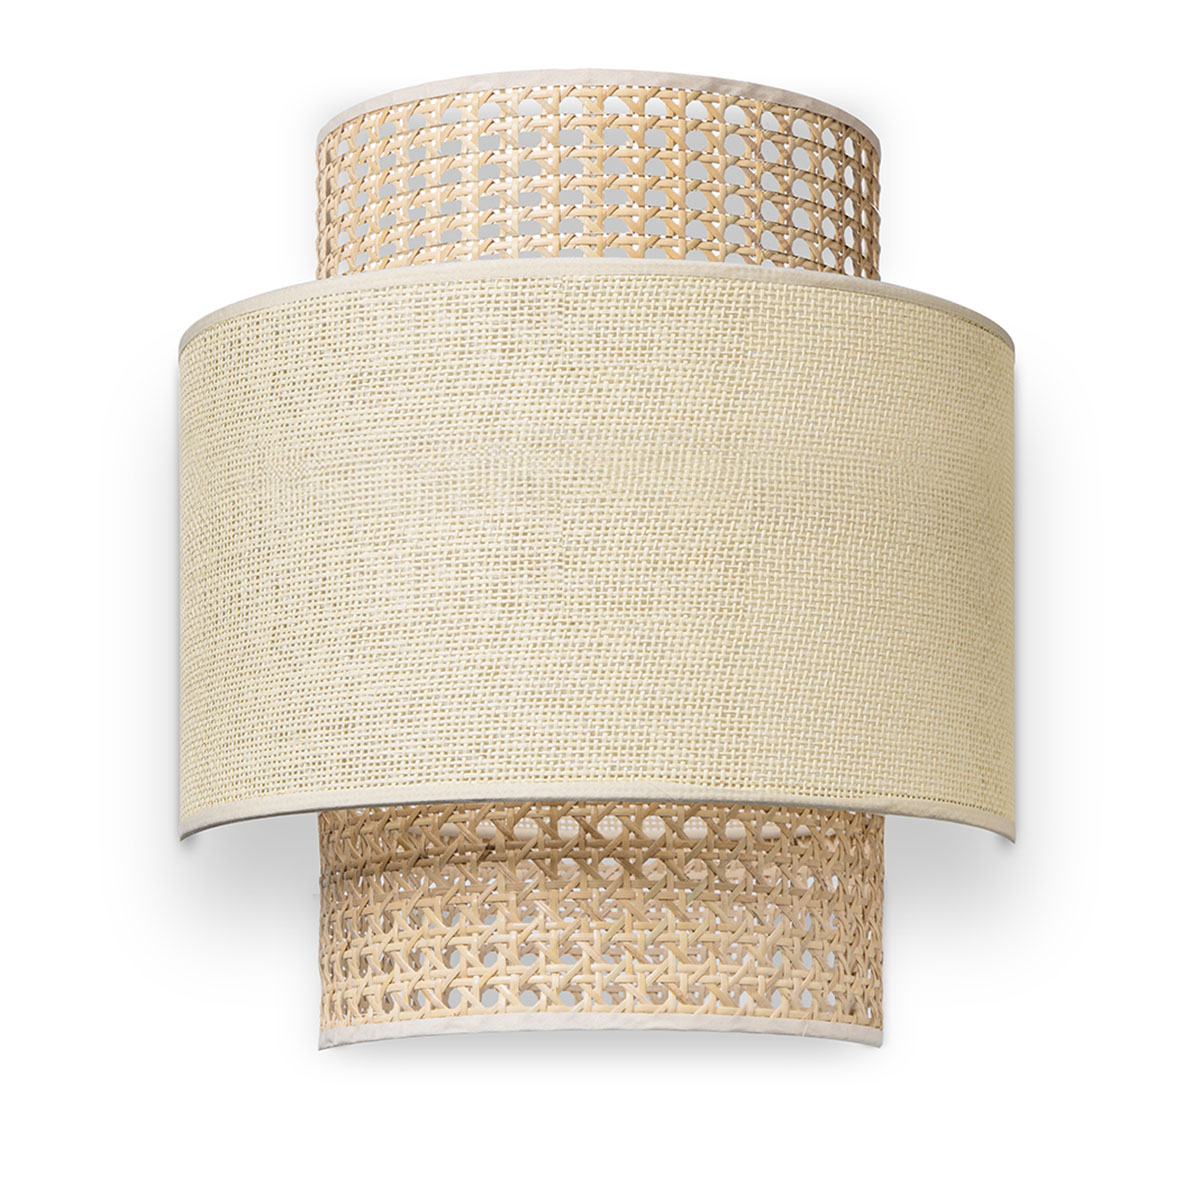 Tangla lighting - TLW7086-01N - LED wall lamp 1 Light - natural rattan and linen in natural - medium - E27